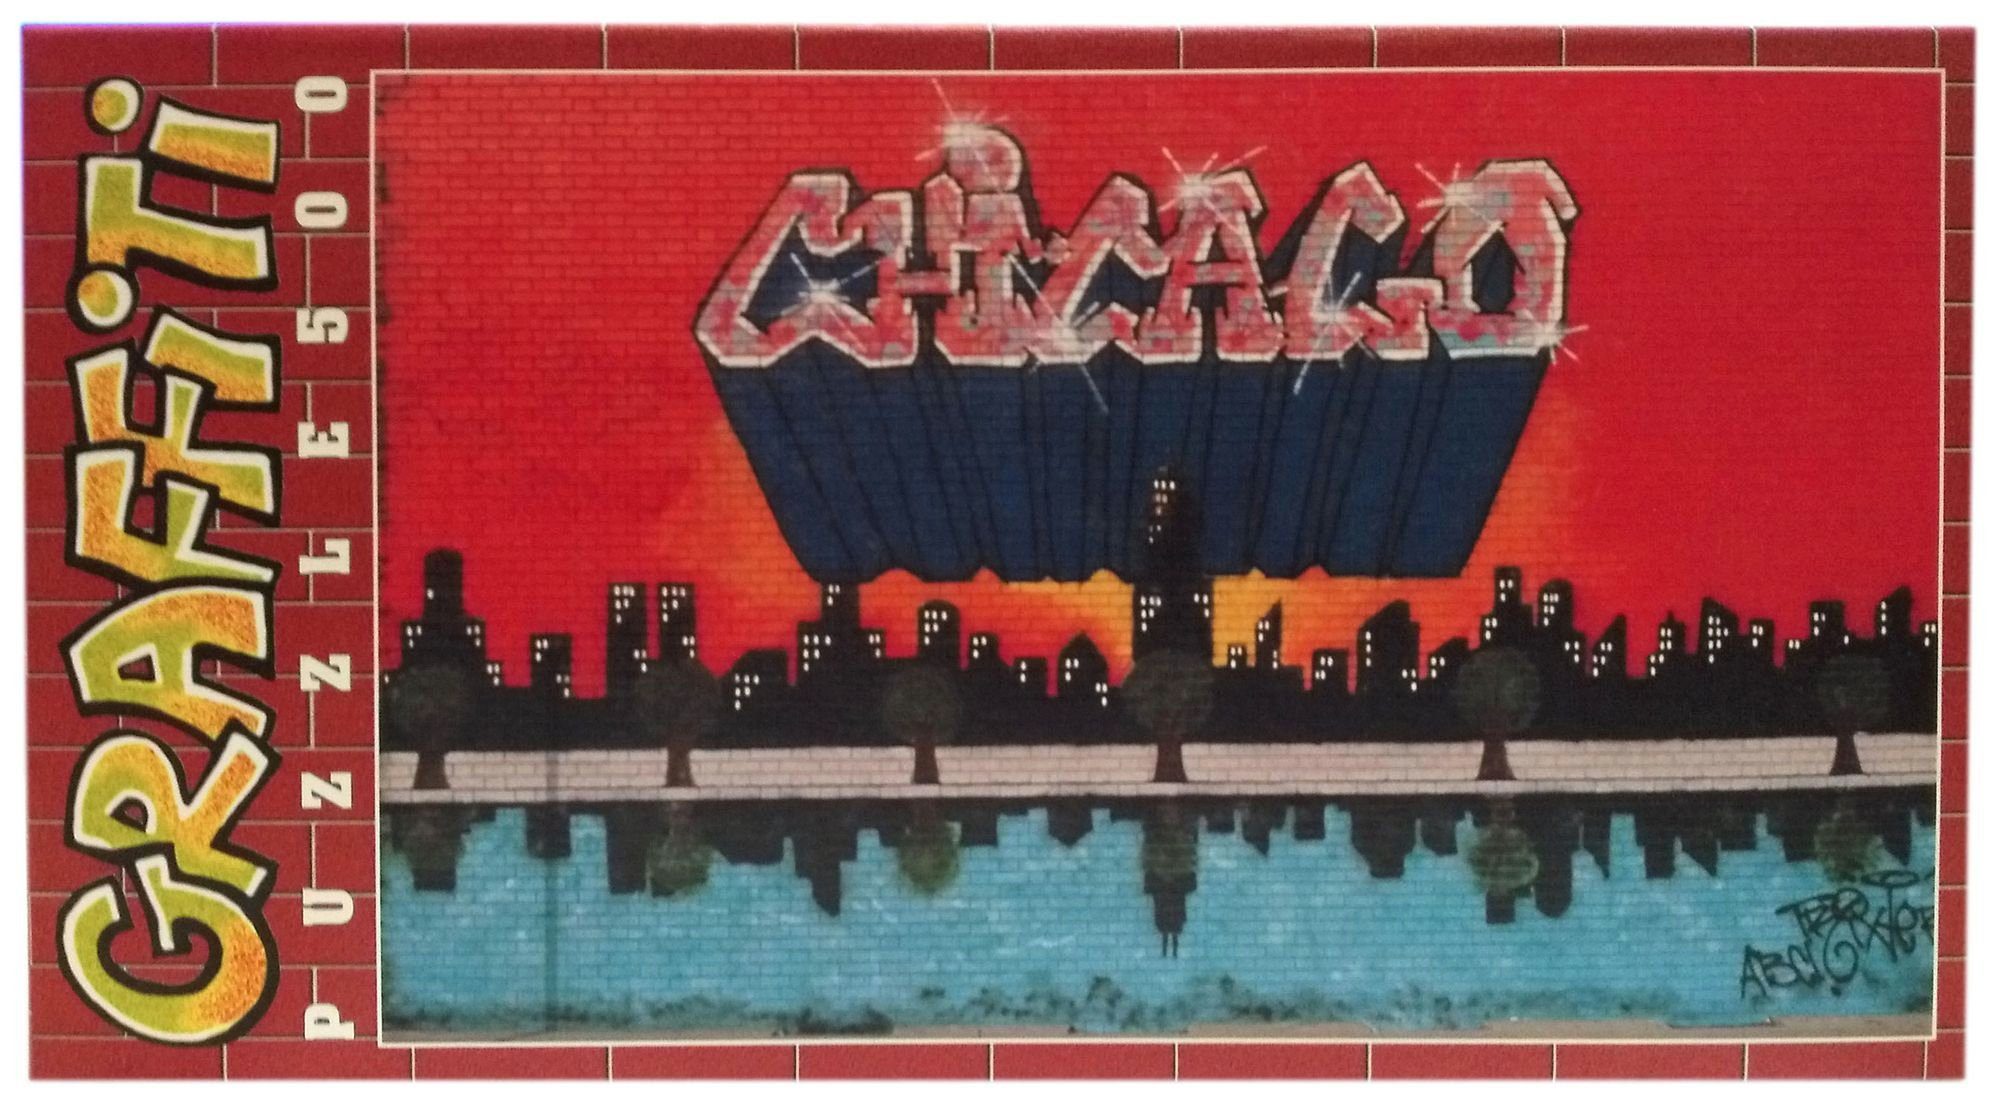 Clementoni® Puzzle Clementoni 500 Puzzleteile Puzzle "Chicago", Teile 500 Graffiti